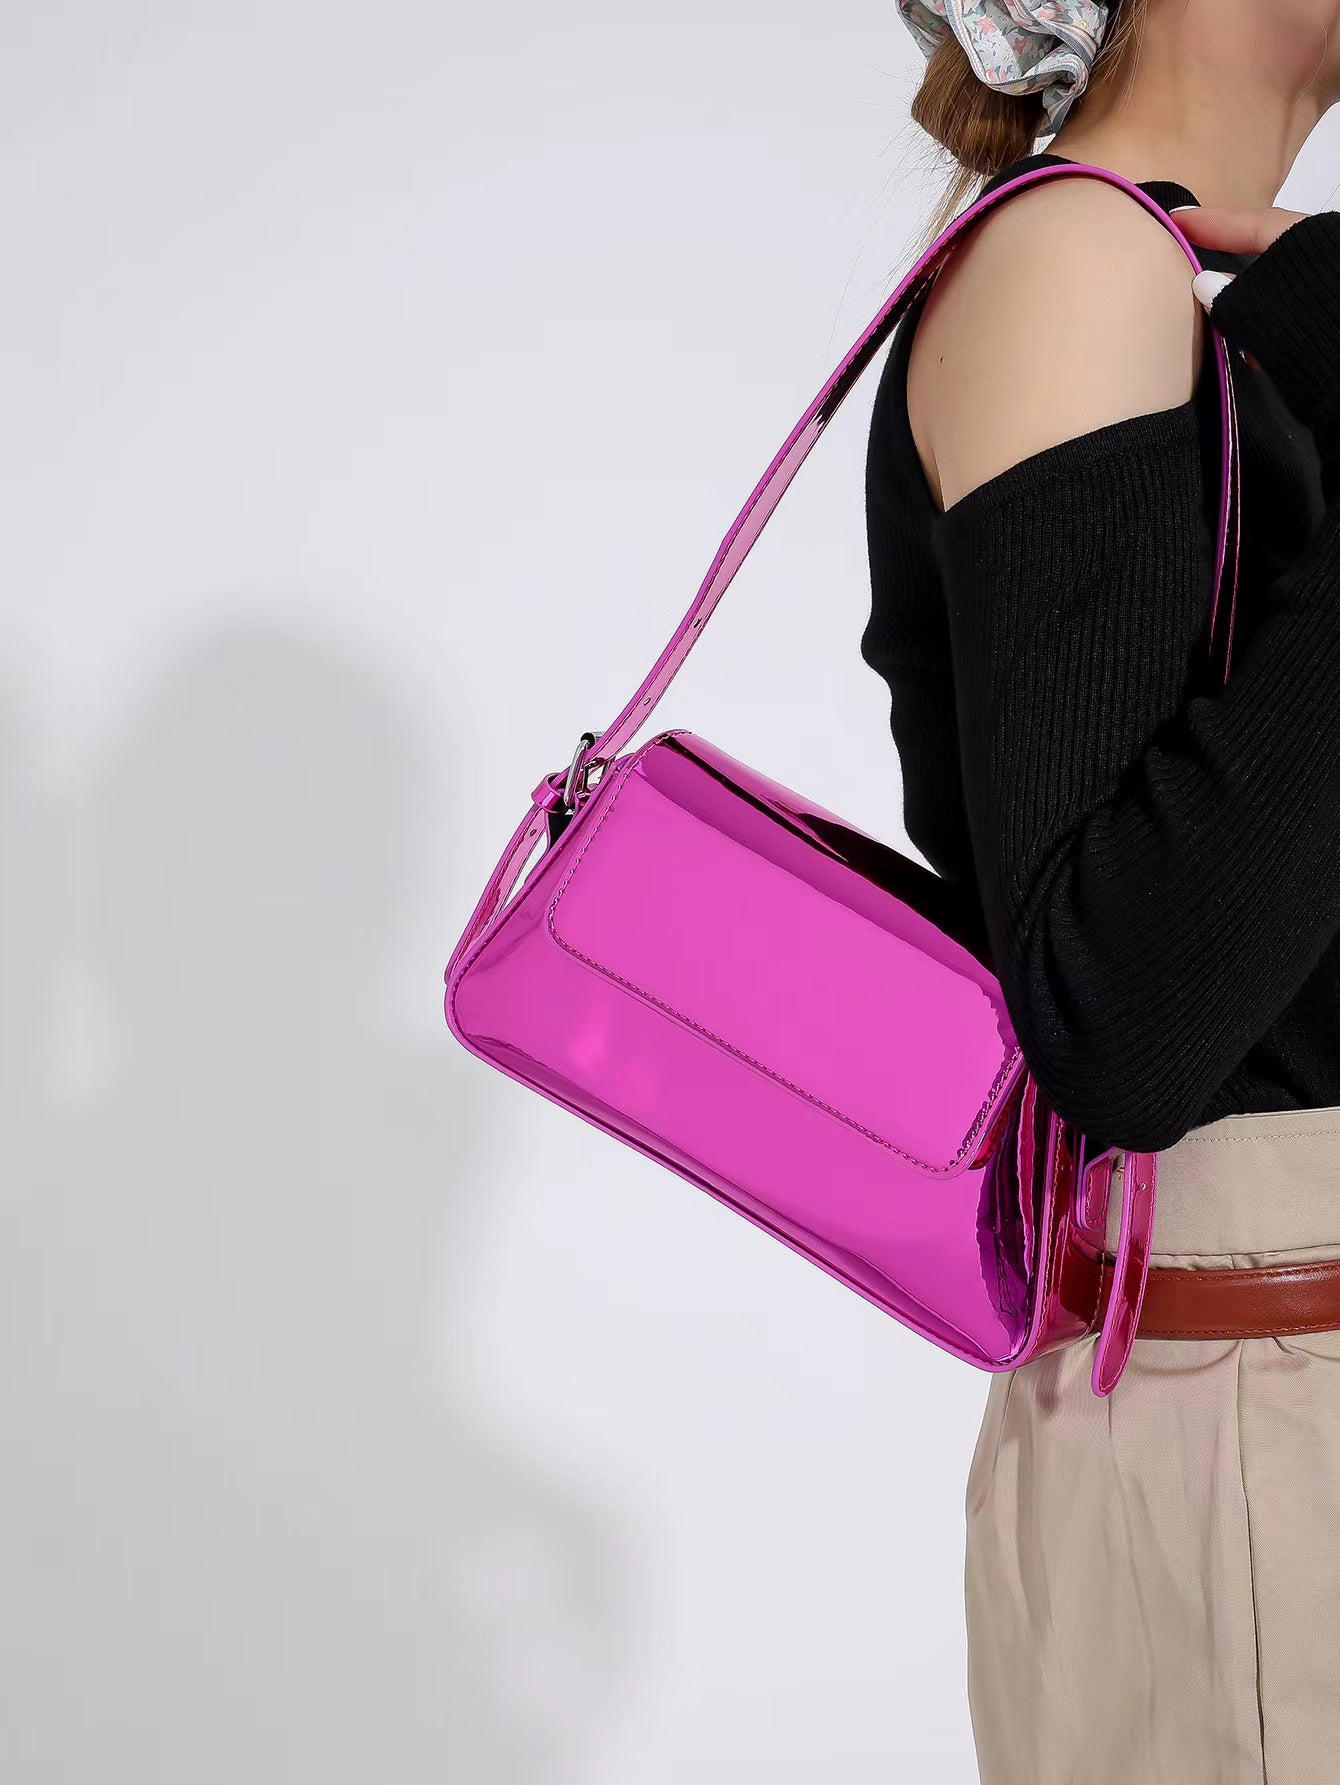 Women's Fashion Underarm Bag Trendy Crossbody Bag